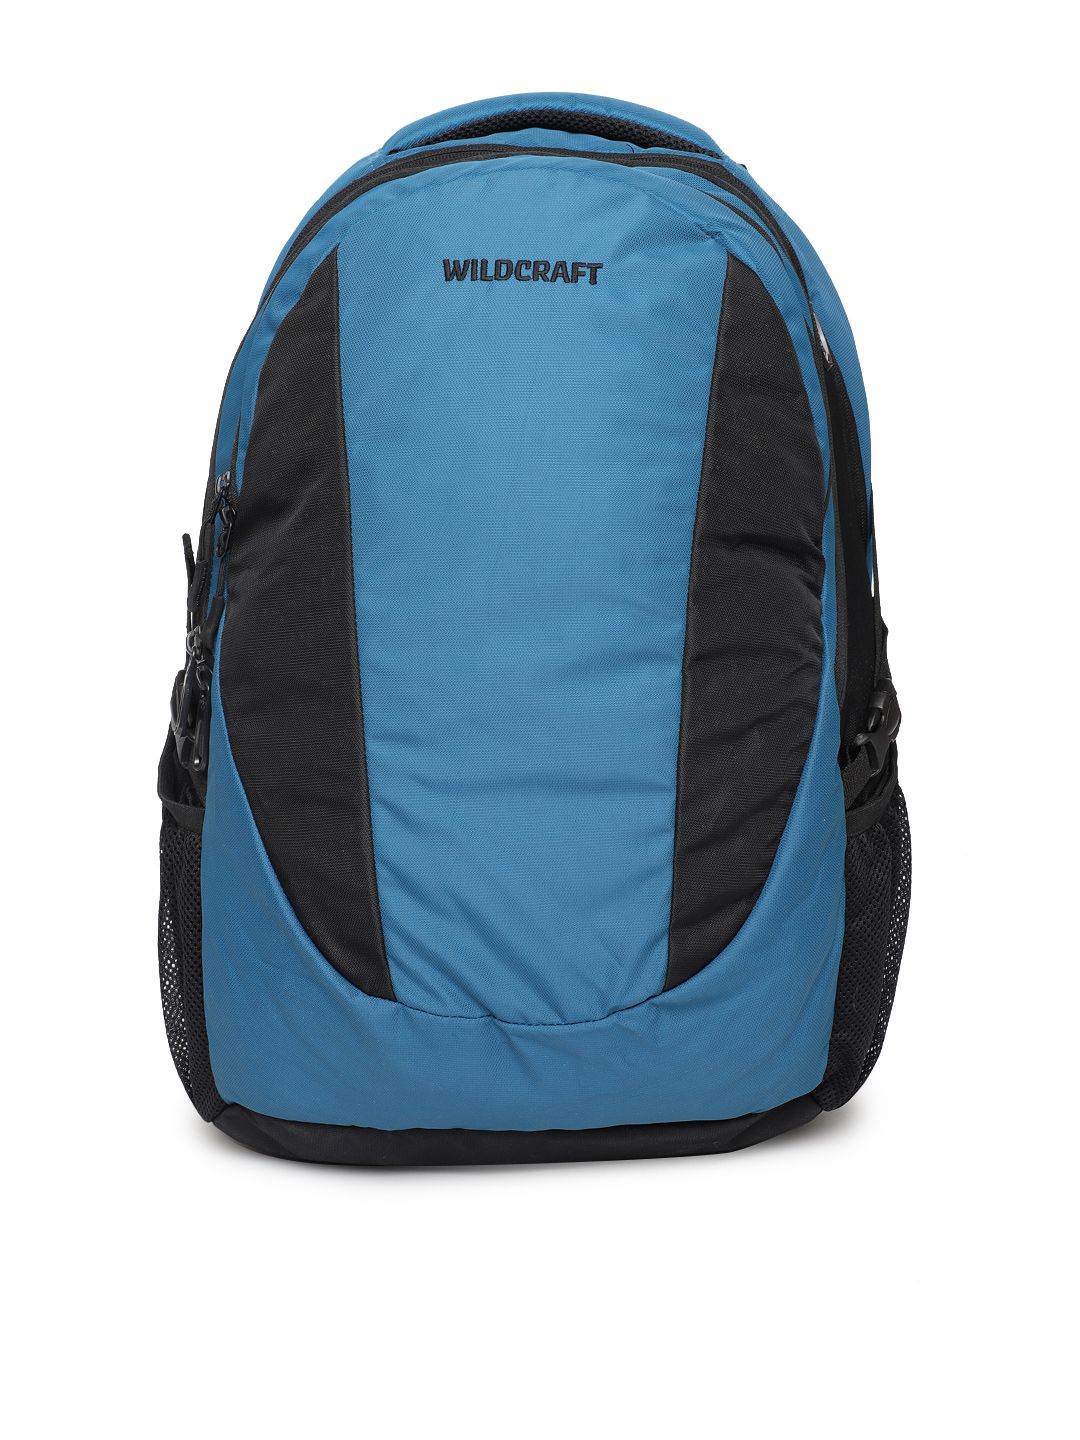 Wildcraft Unisex Black & Blue Colourblocked Backpack Price in India